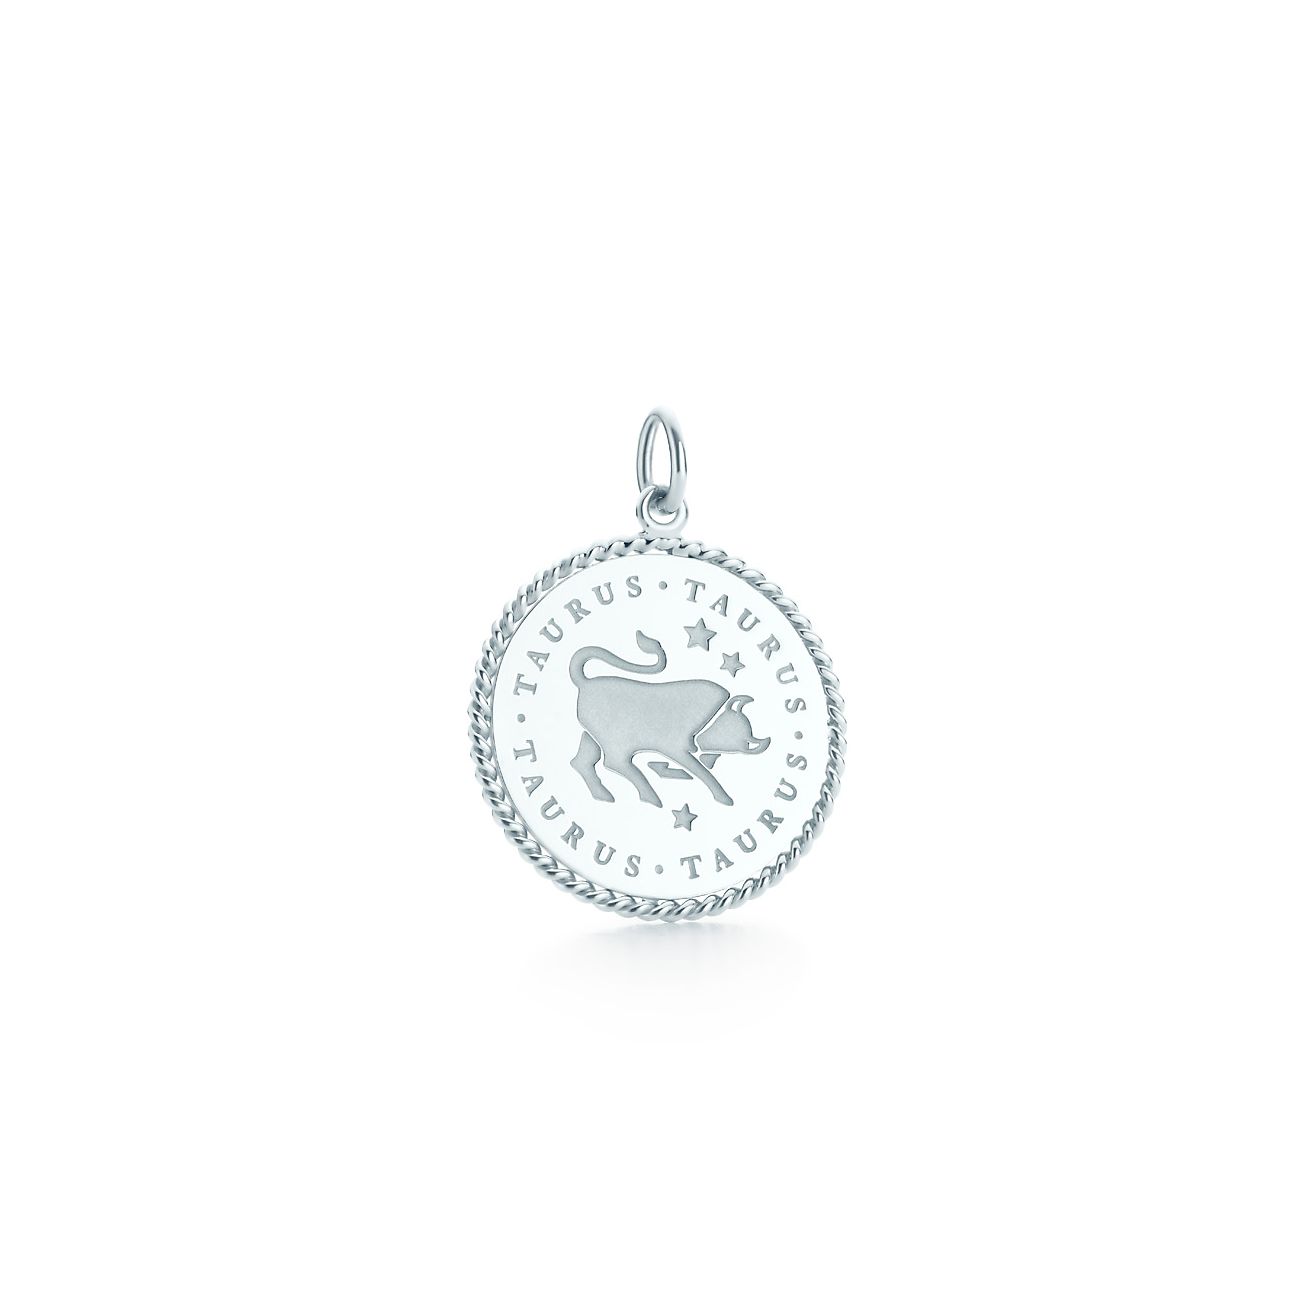 Taurus zodiac charm in sterling silver 